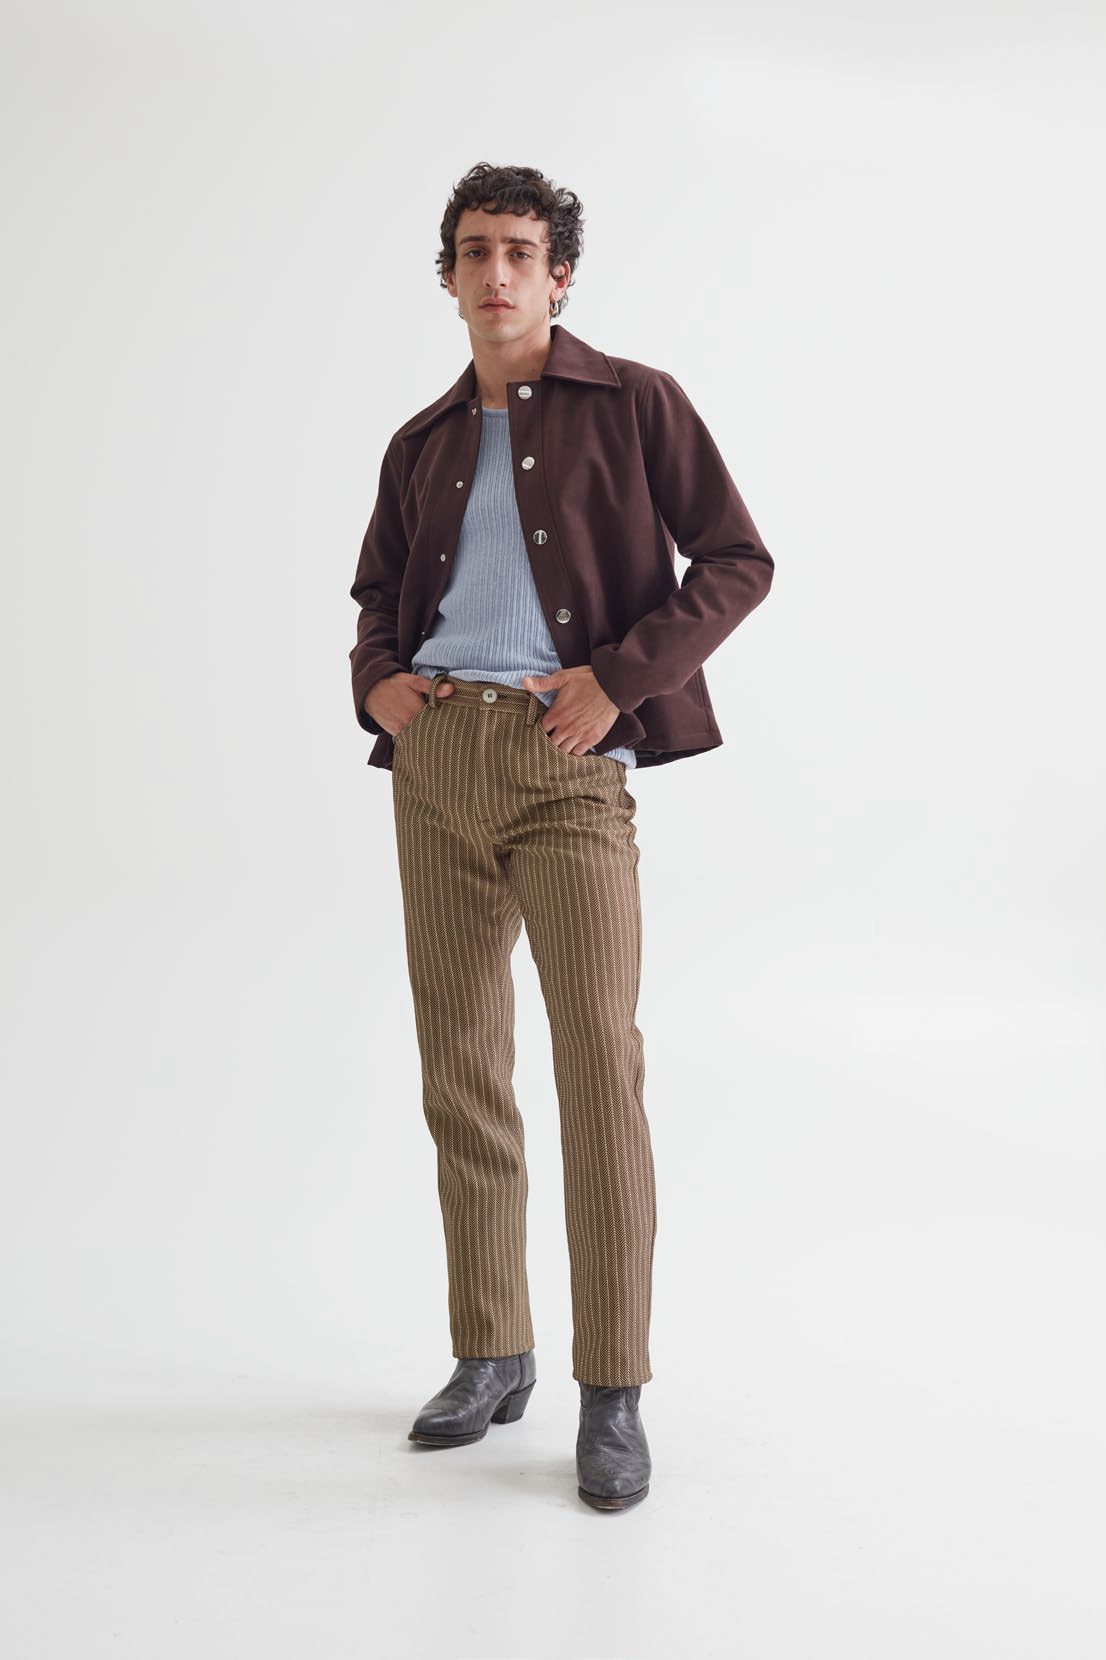 Séfr Spring/Summer 2021 "Union" Collection Lookbook Release Information Menswear Closer Look Swedish Label Tailoring Shirts Blazers Denim Jeans 